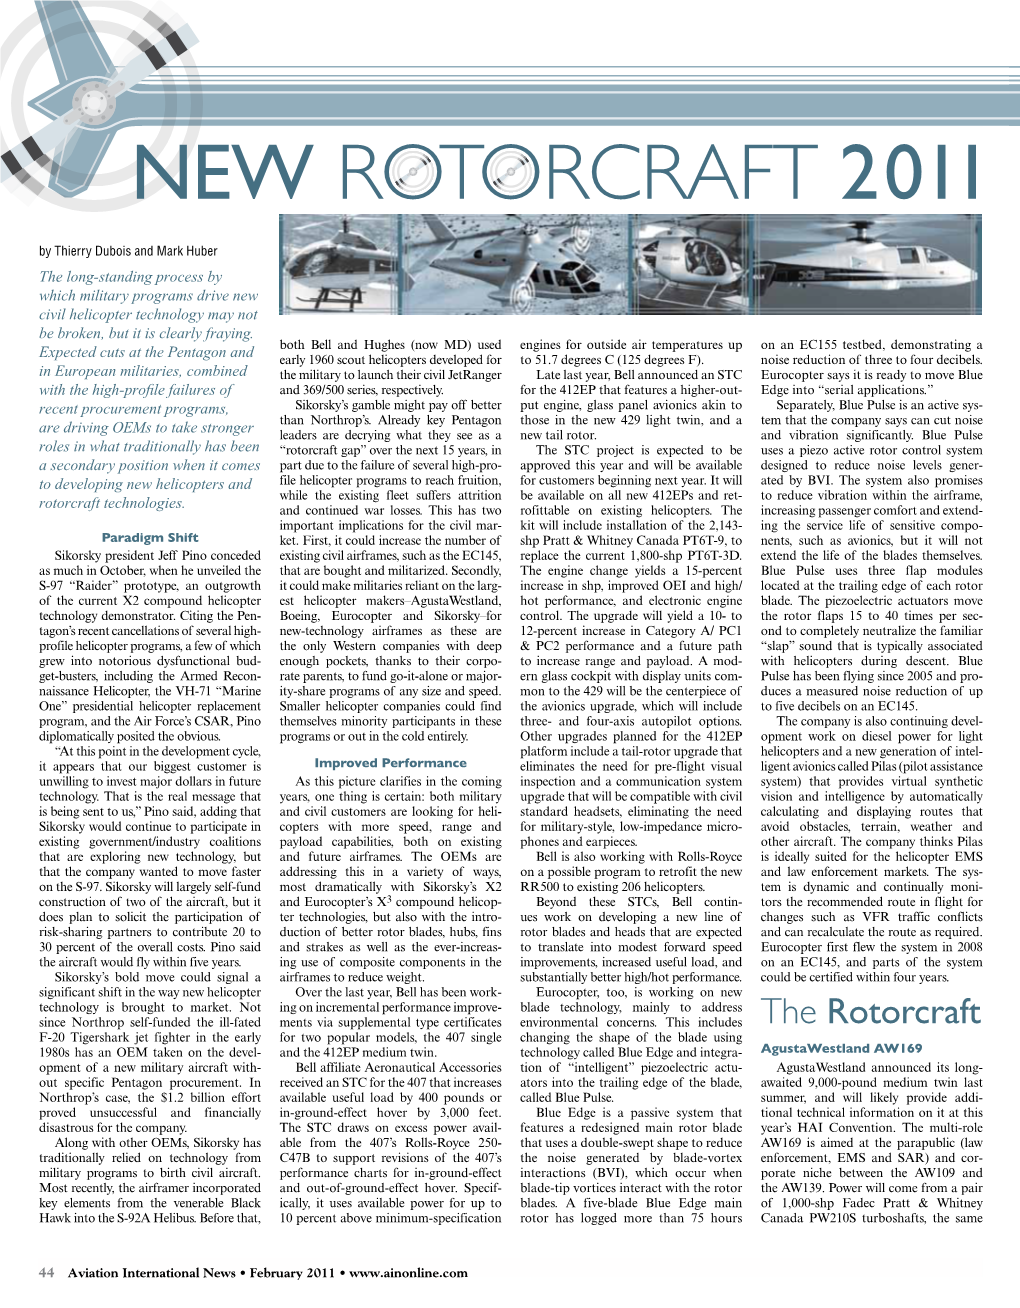 New Rotorcraft 2011